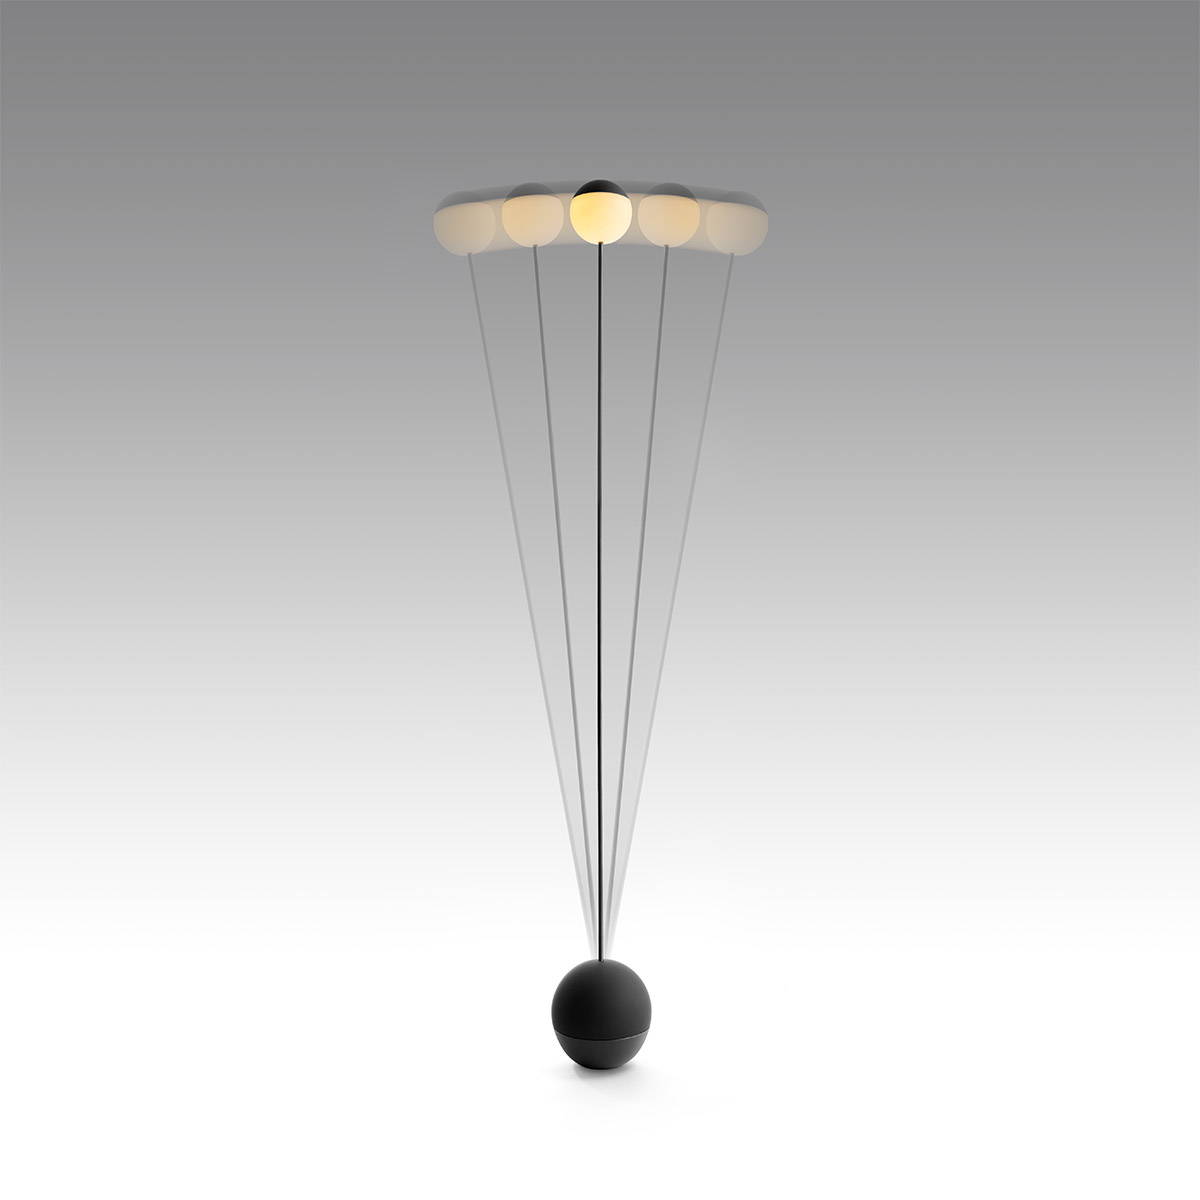 Balancing Portable Floor Lamp